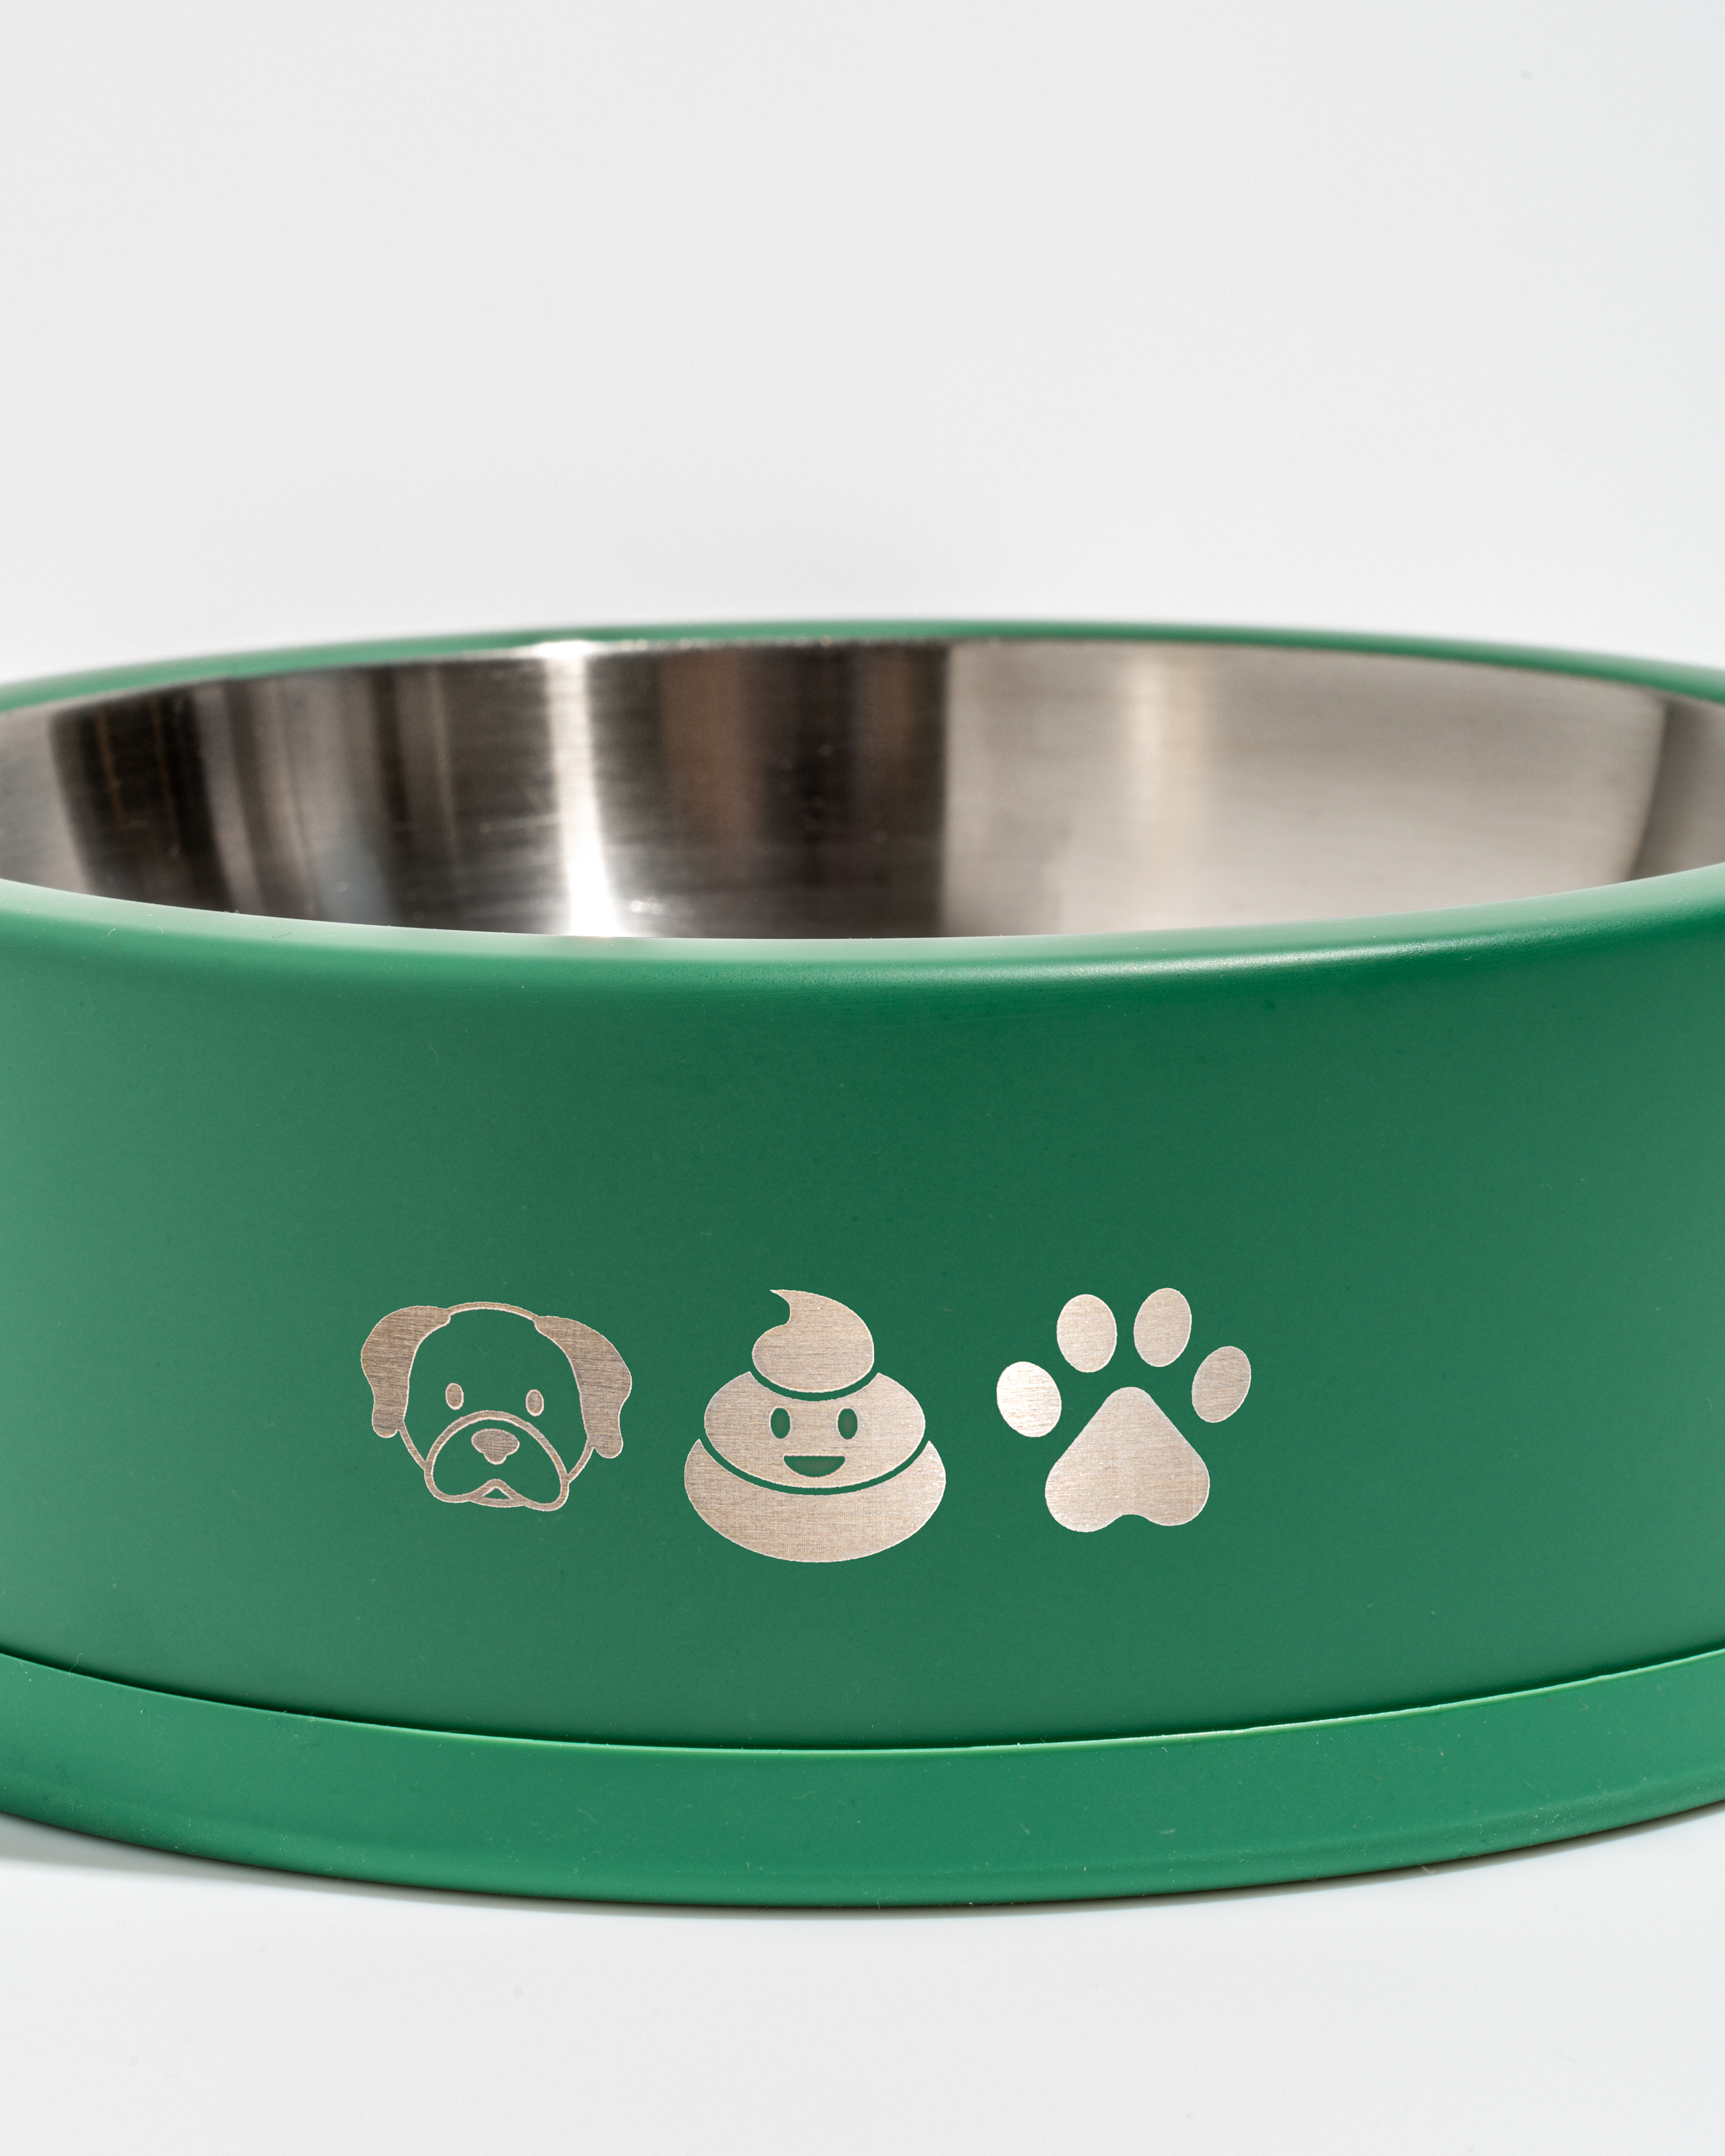 Custom Personalized Elevated Dog Feeder Stand Large Raised Bowls